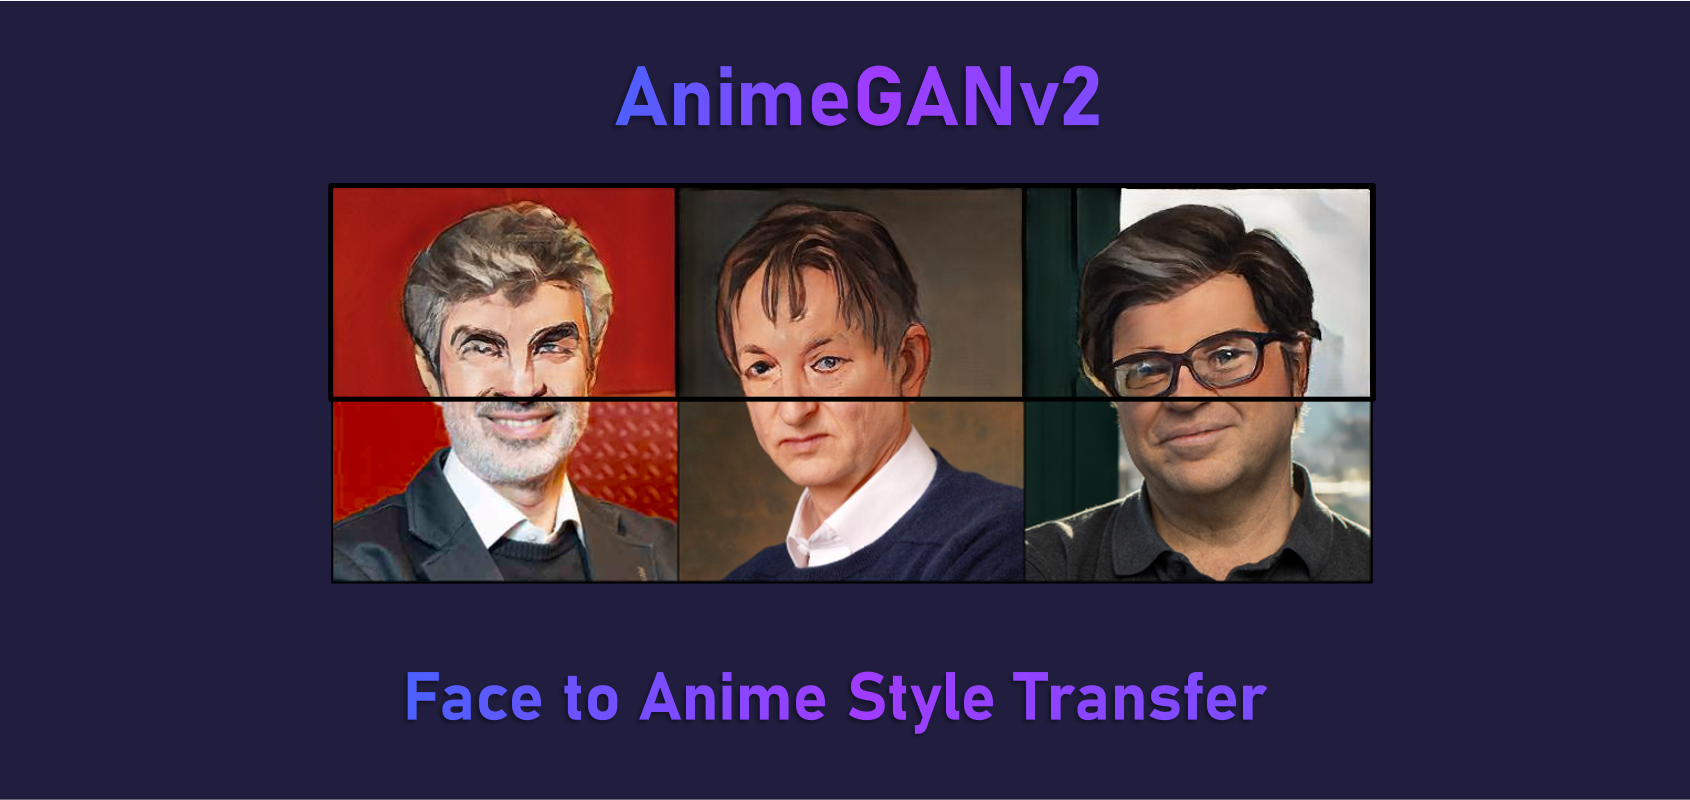 AnimeGANv2